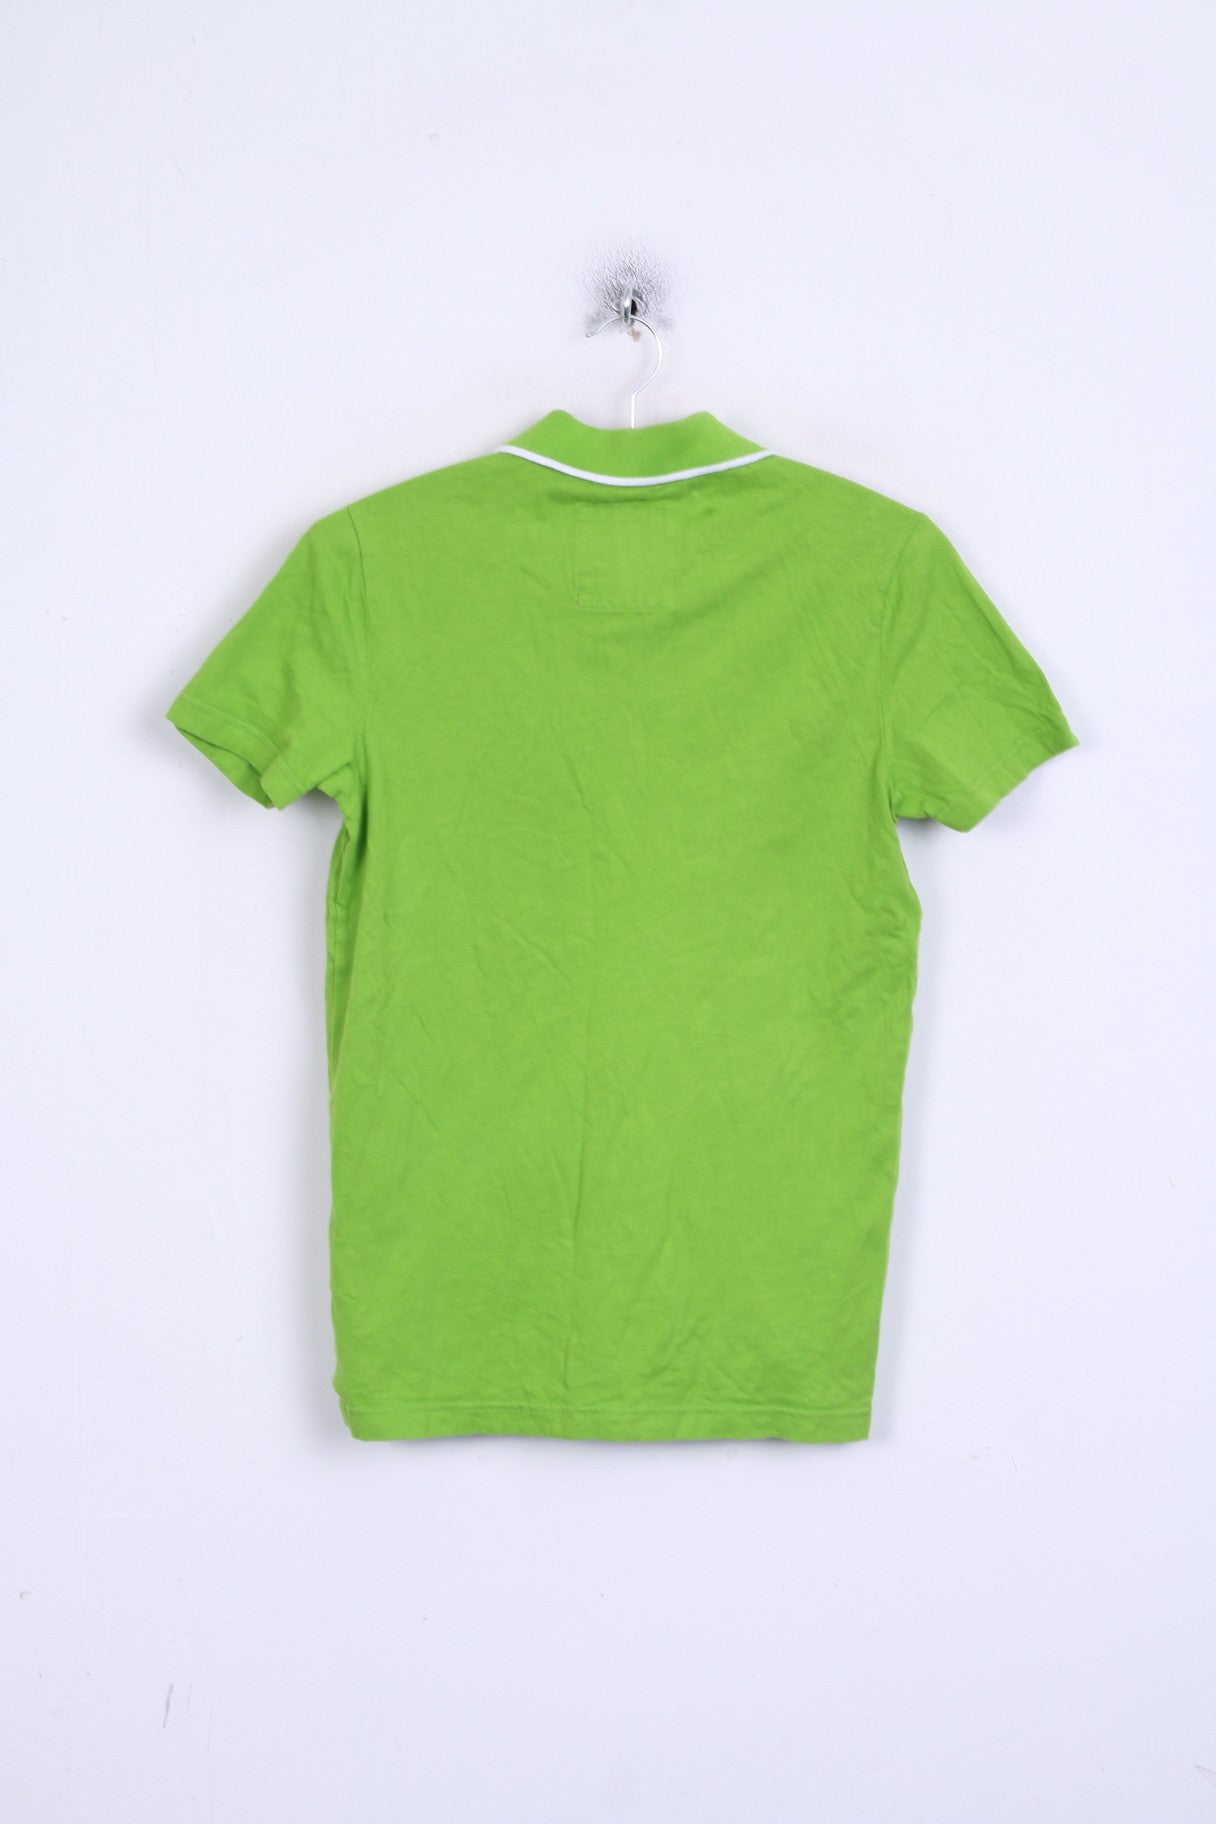 HOLLISTER Mens S Polo Shirt California Cotton Green Short Sleeve